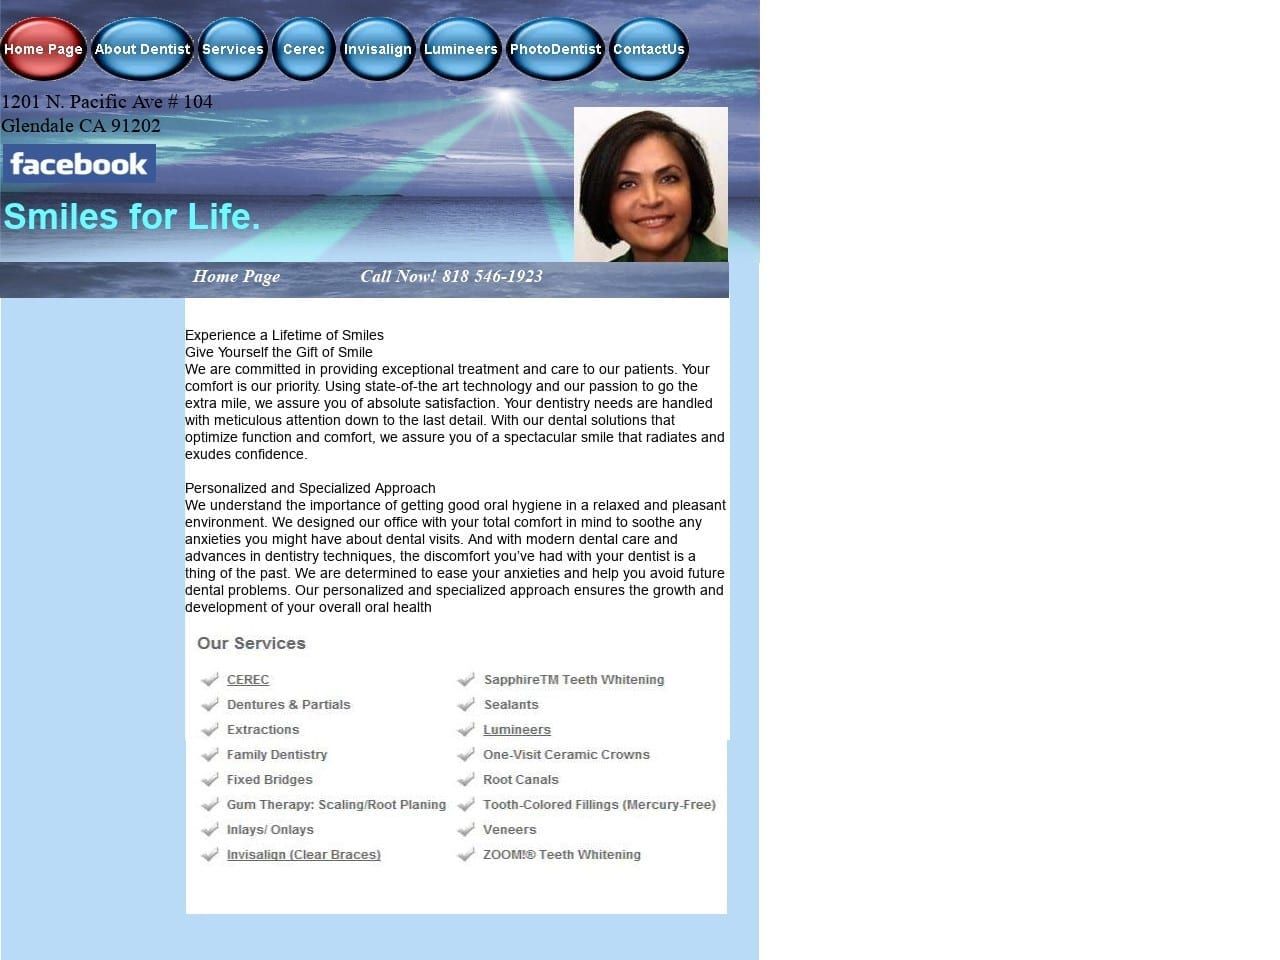 Clarisse Atakhanian DDS Inc. Website Screenshot from glendaledentalcare.com